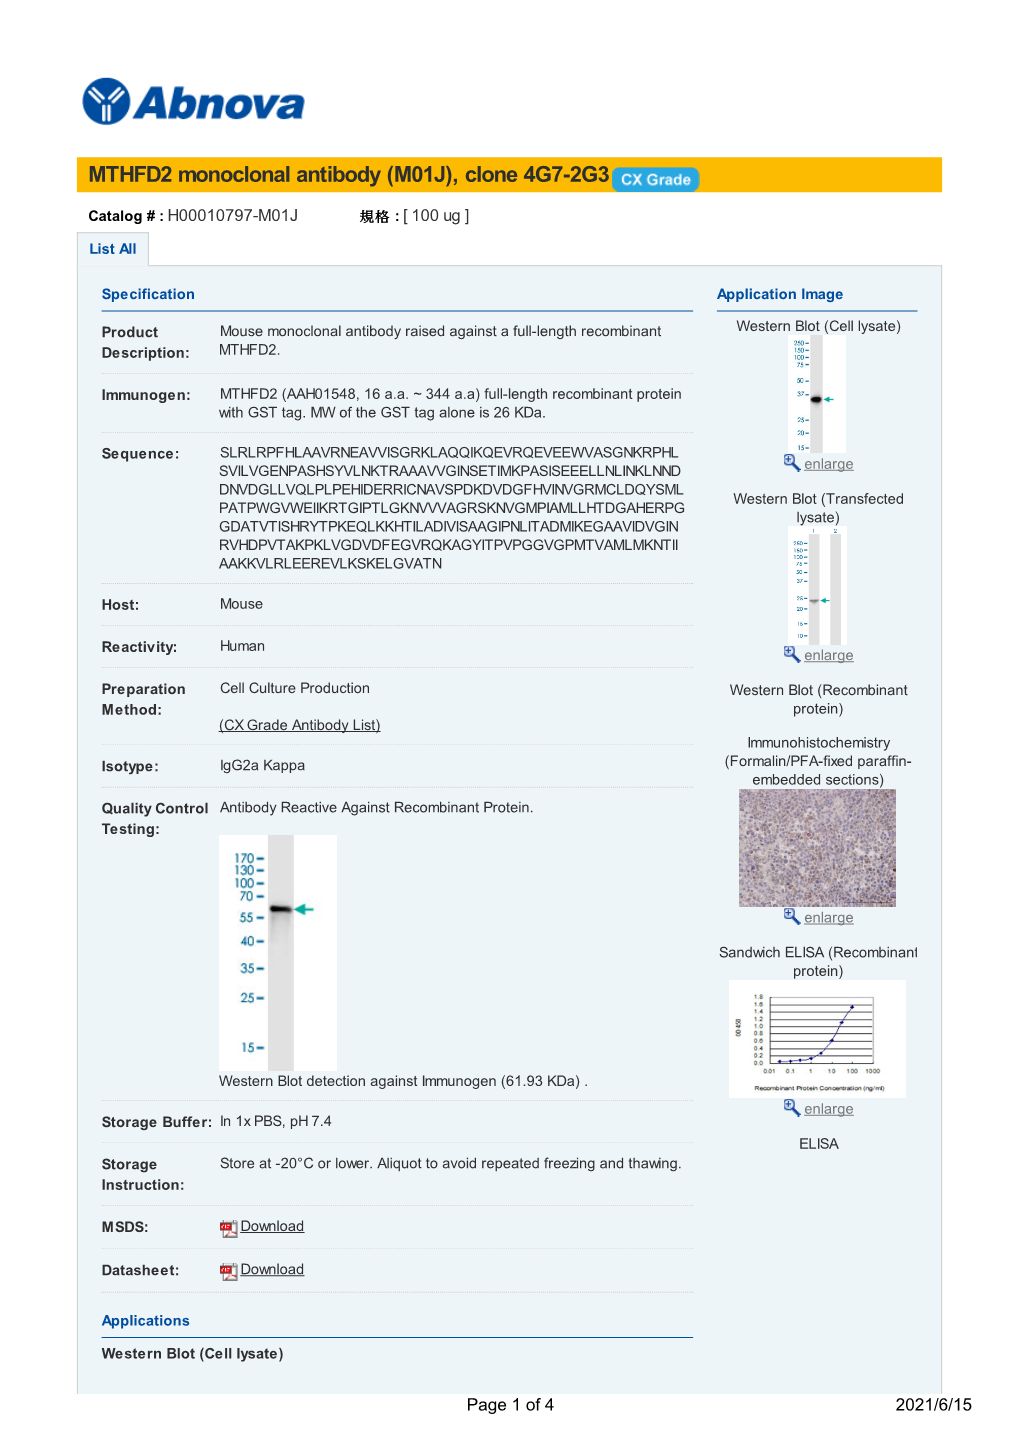 MTHFD2 Monoclonal Antibody (M01J), Clone 4G7-2G3